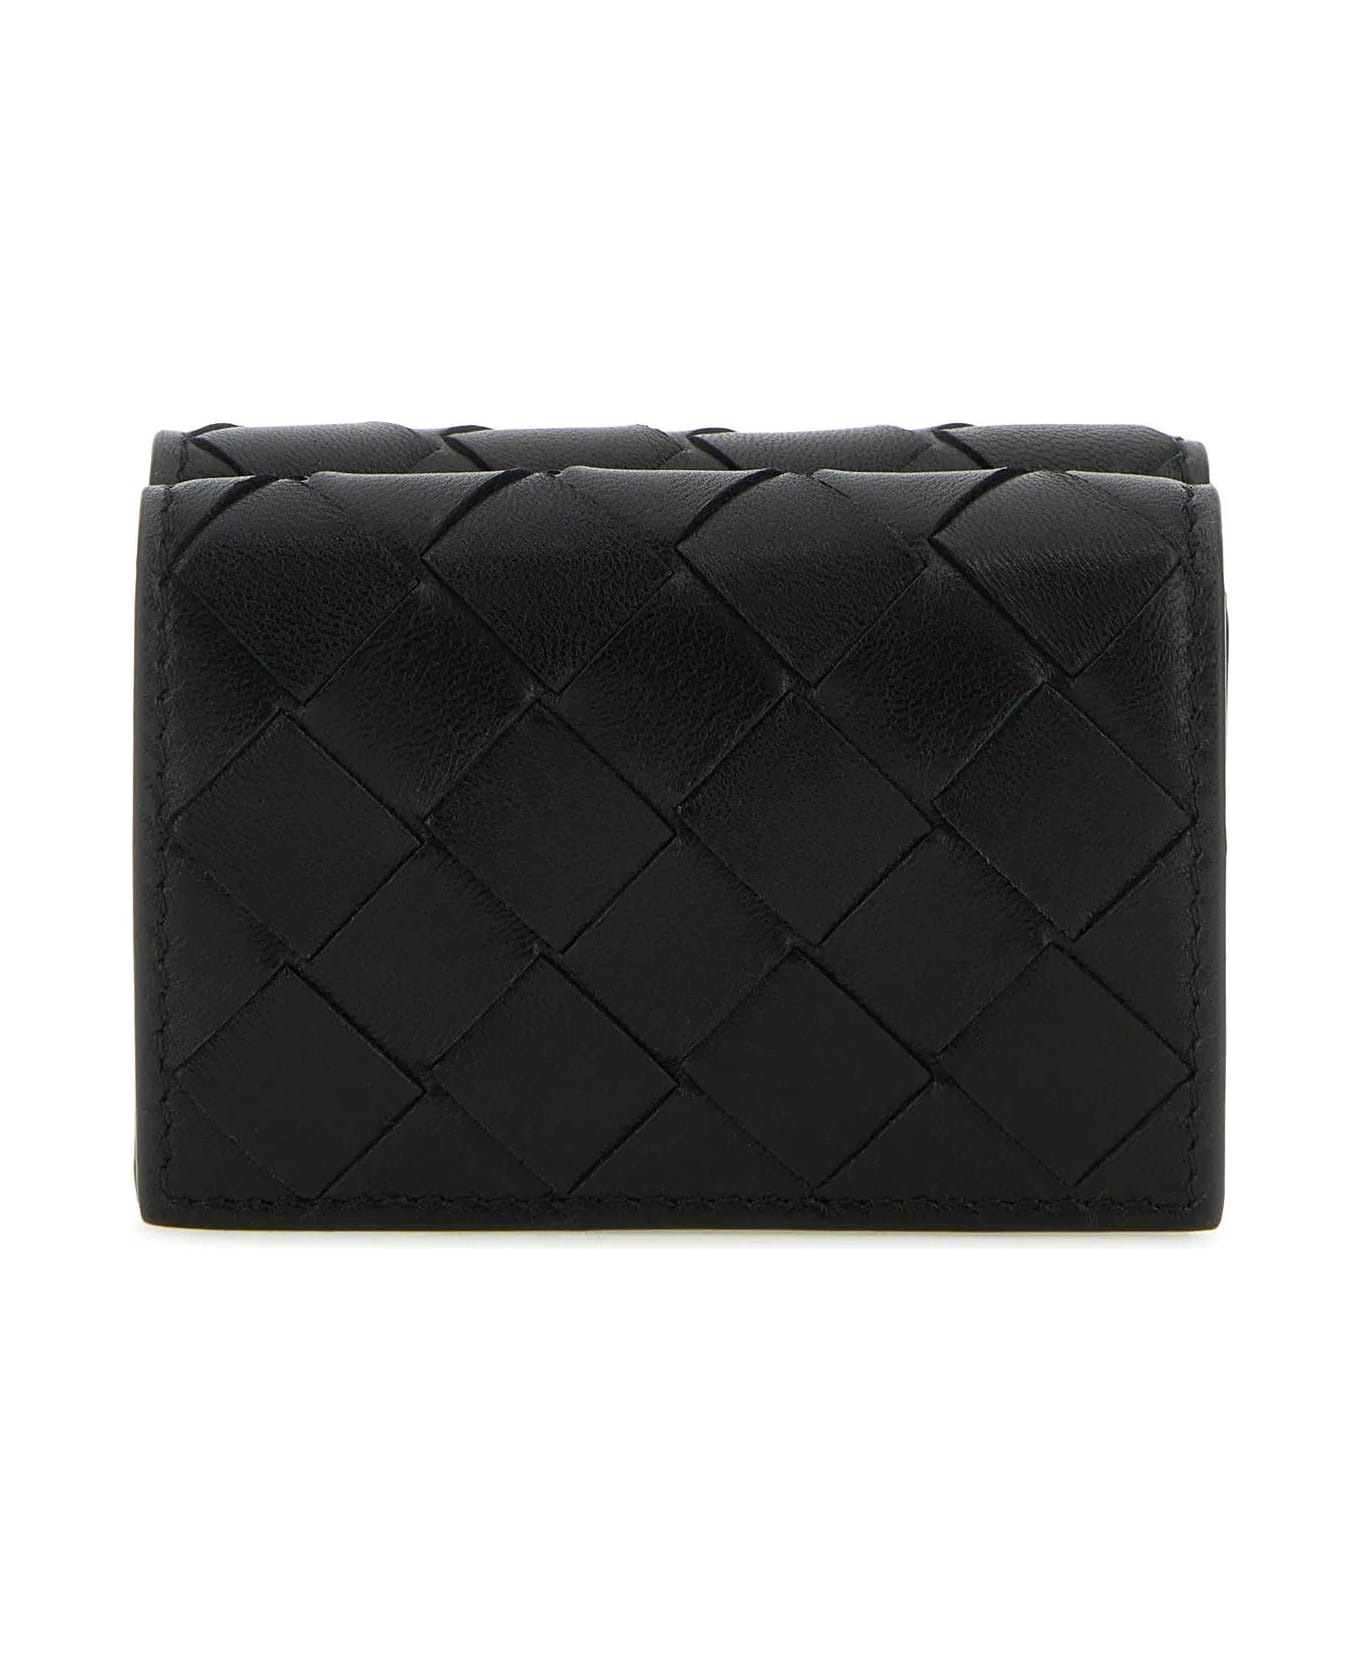 Bottega Veneta Black Leather Tiny Intrecciato Wallet - Black